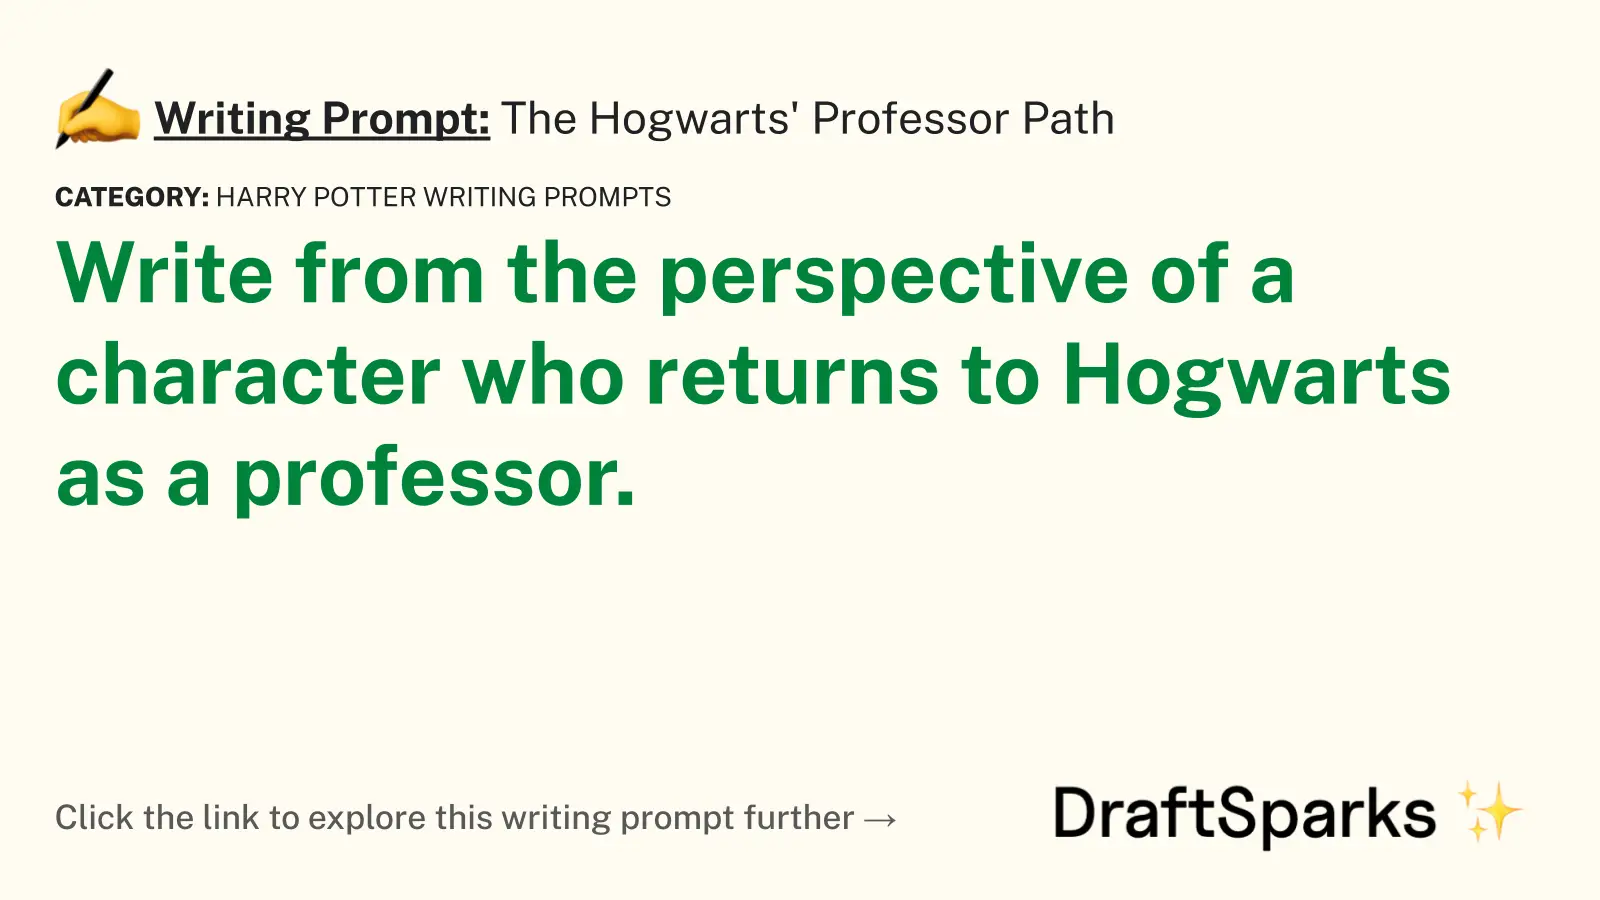 The Hogwarts’ Professor Path